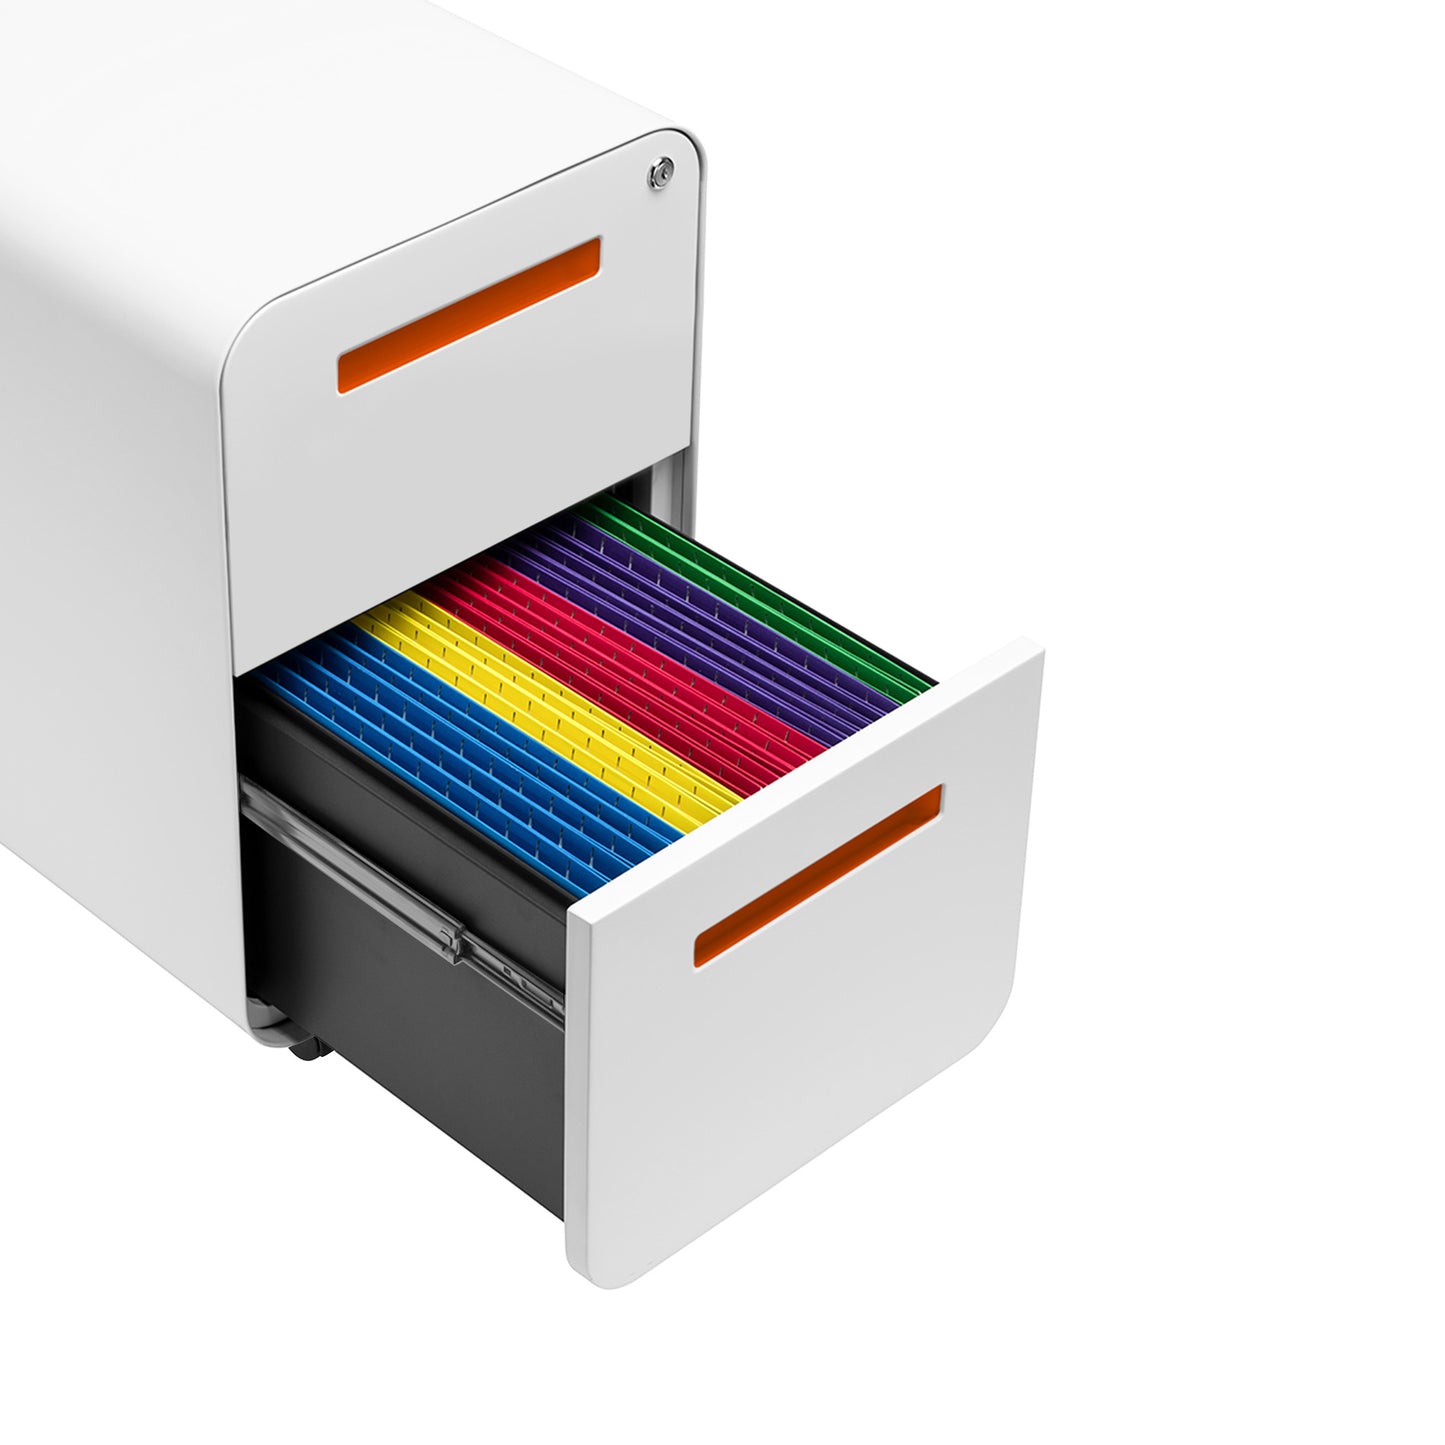 Stockpile Curve 2-Drawer File Cabinet (White/Orange)